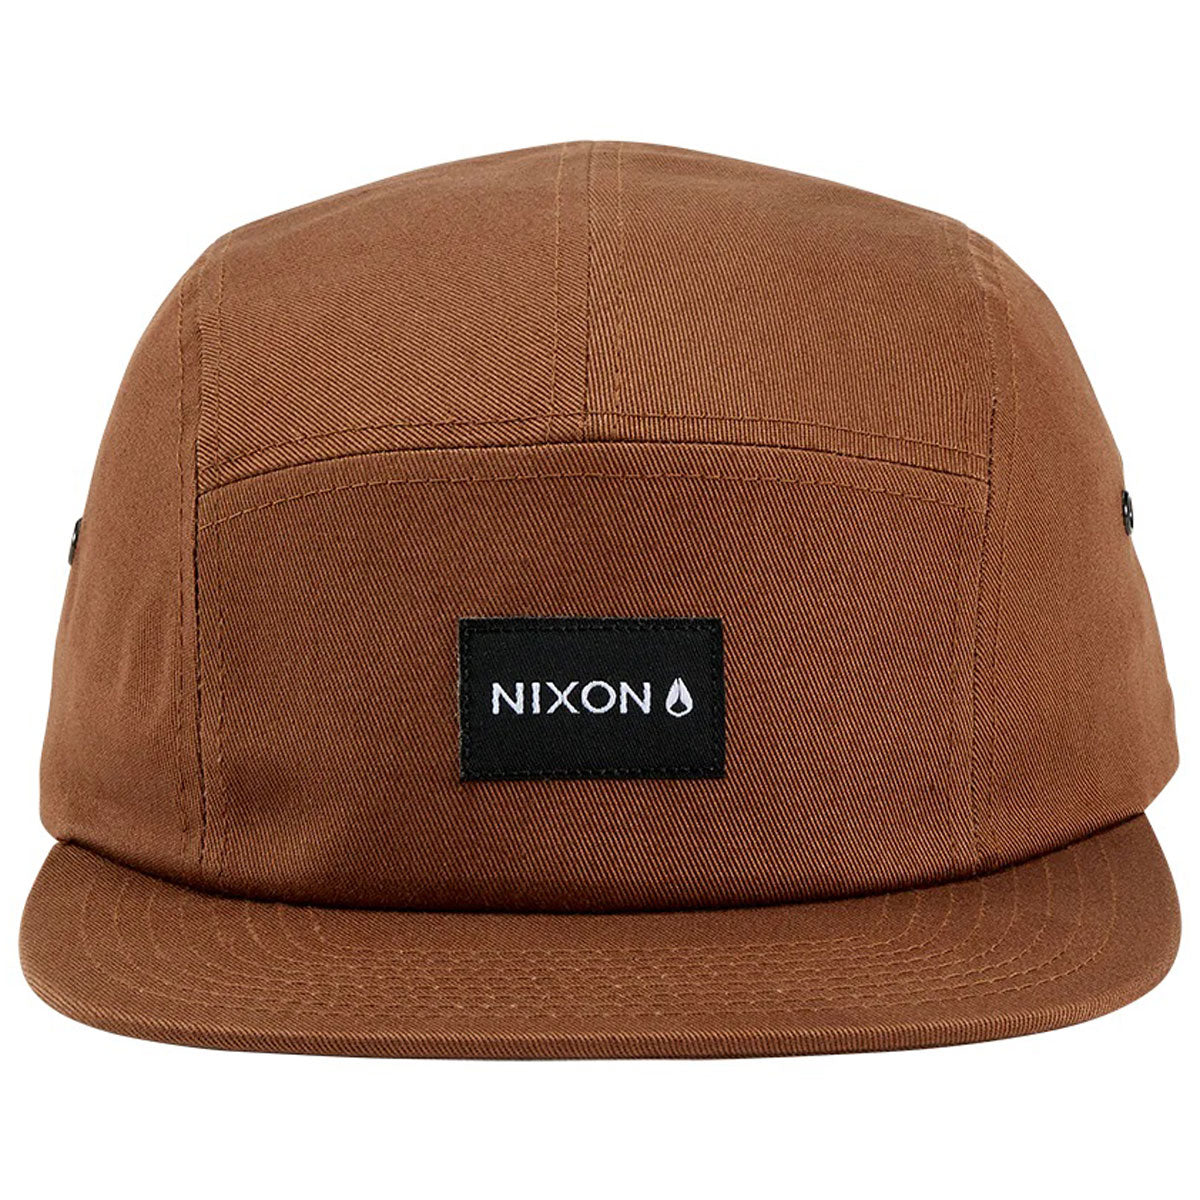 Nixon Mikey Strapback Hat - Brown image 3